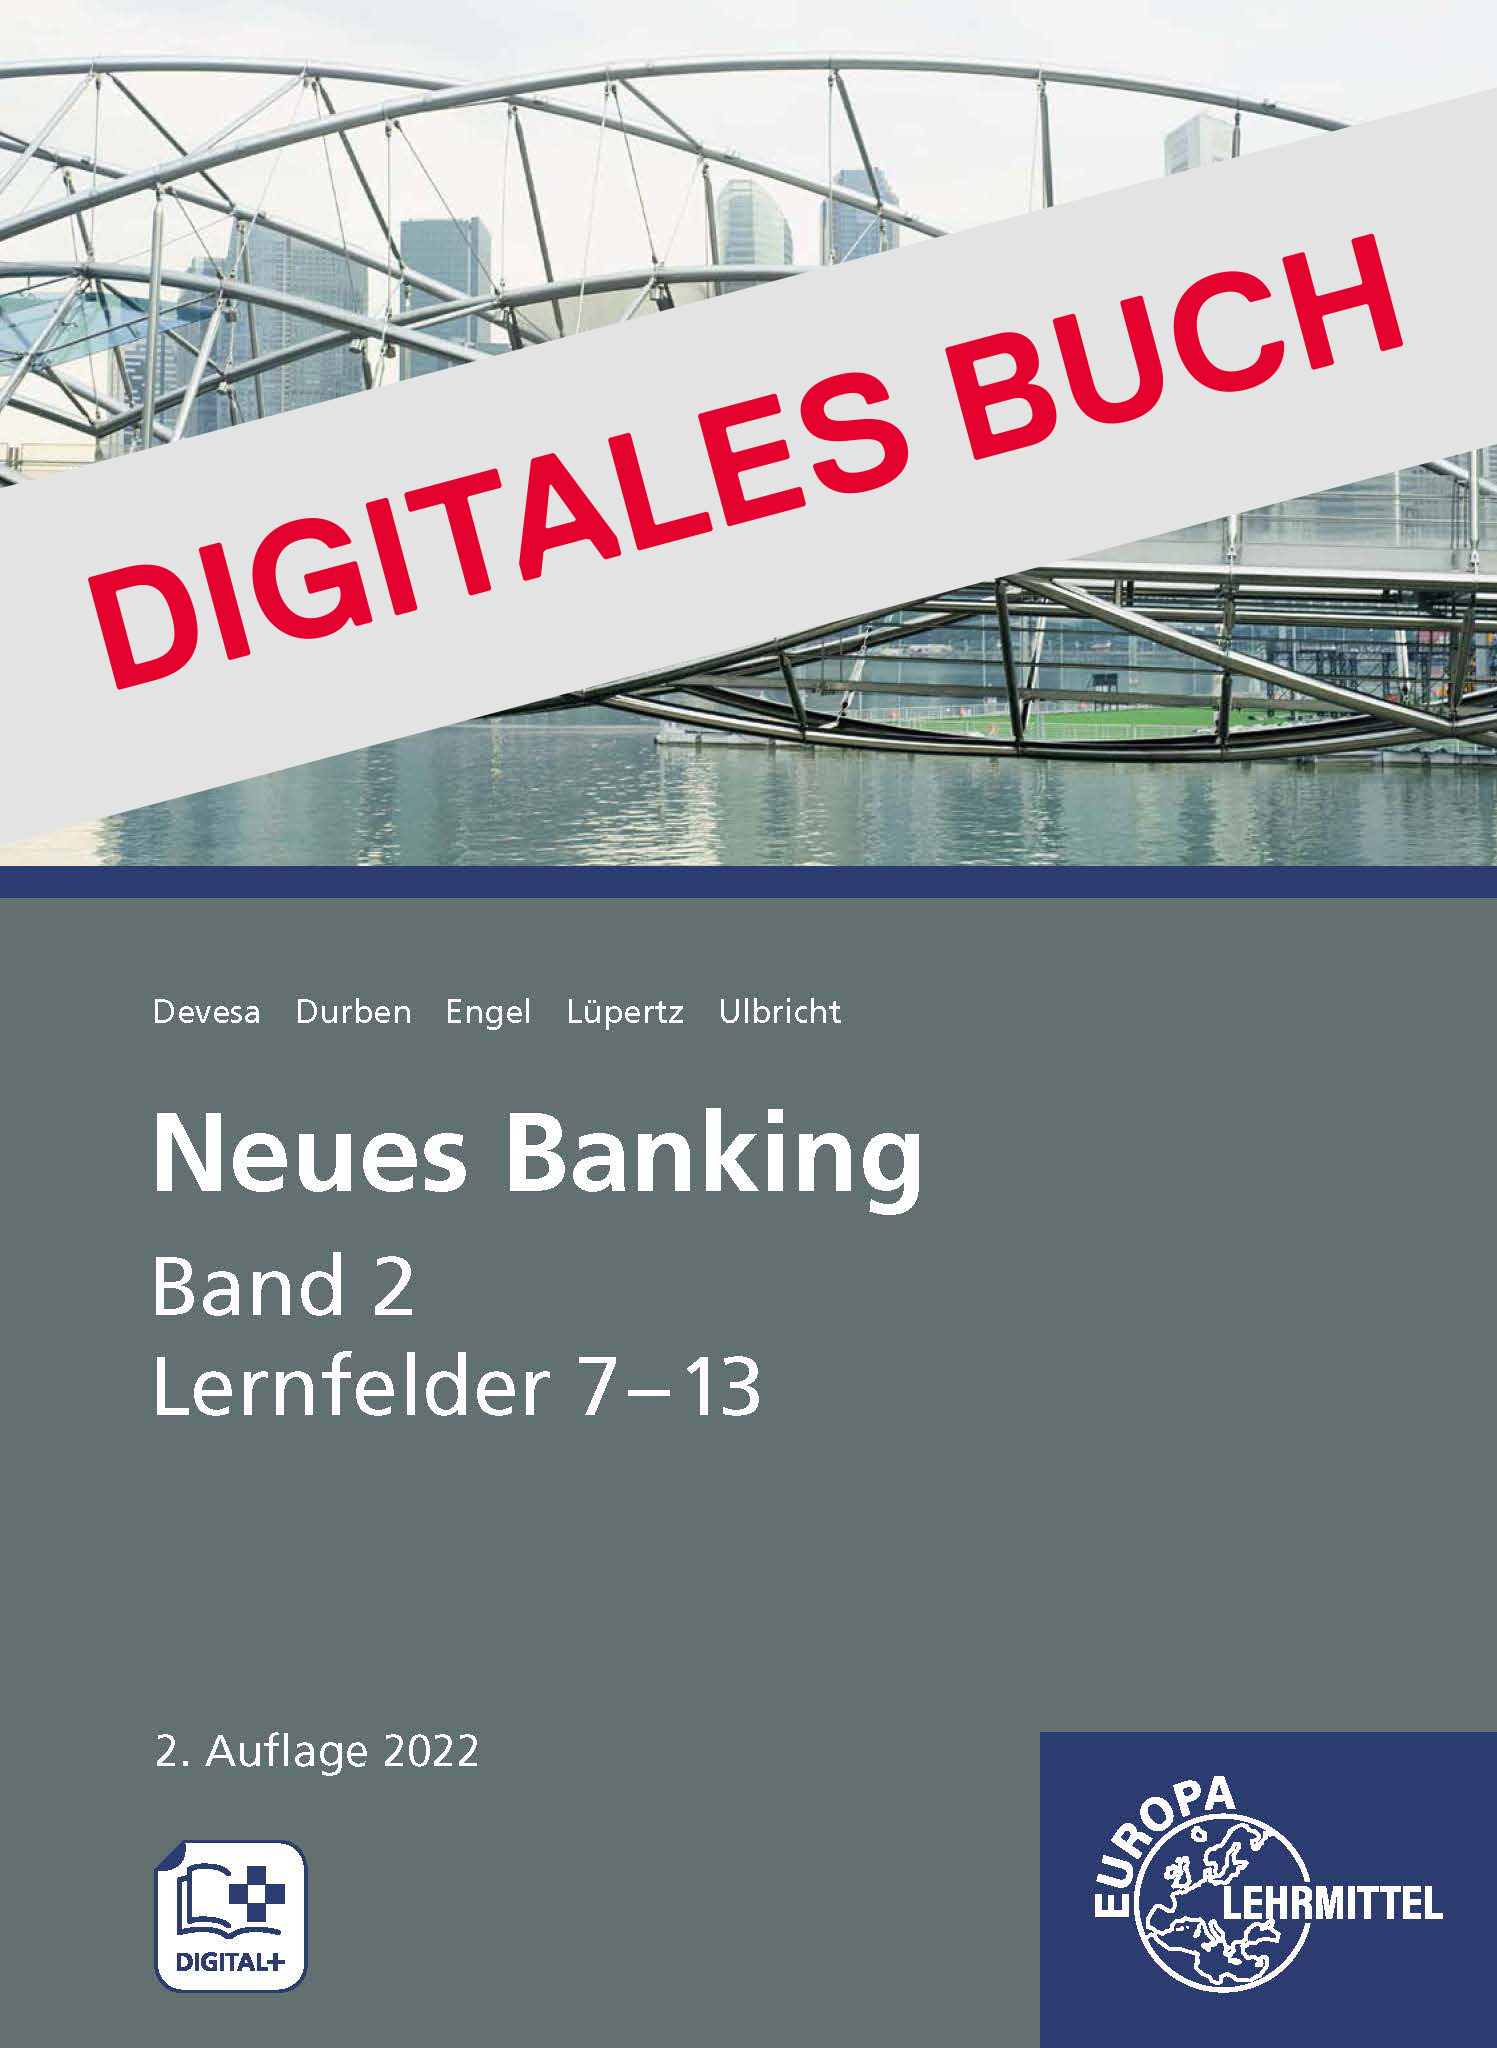 Neues Banking Band 2 Lernfelder 7 - 13 - Digitales Buch